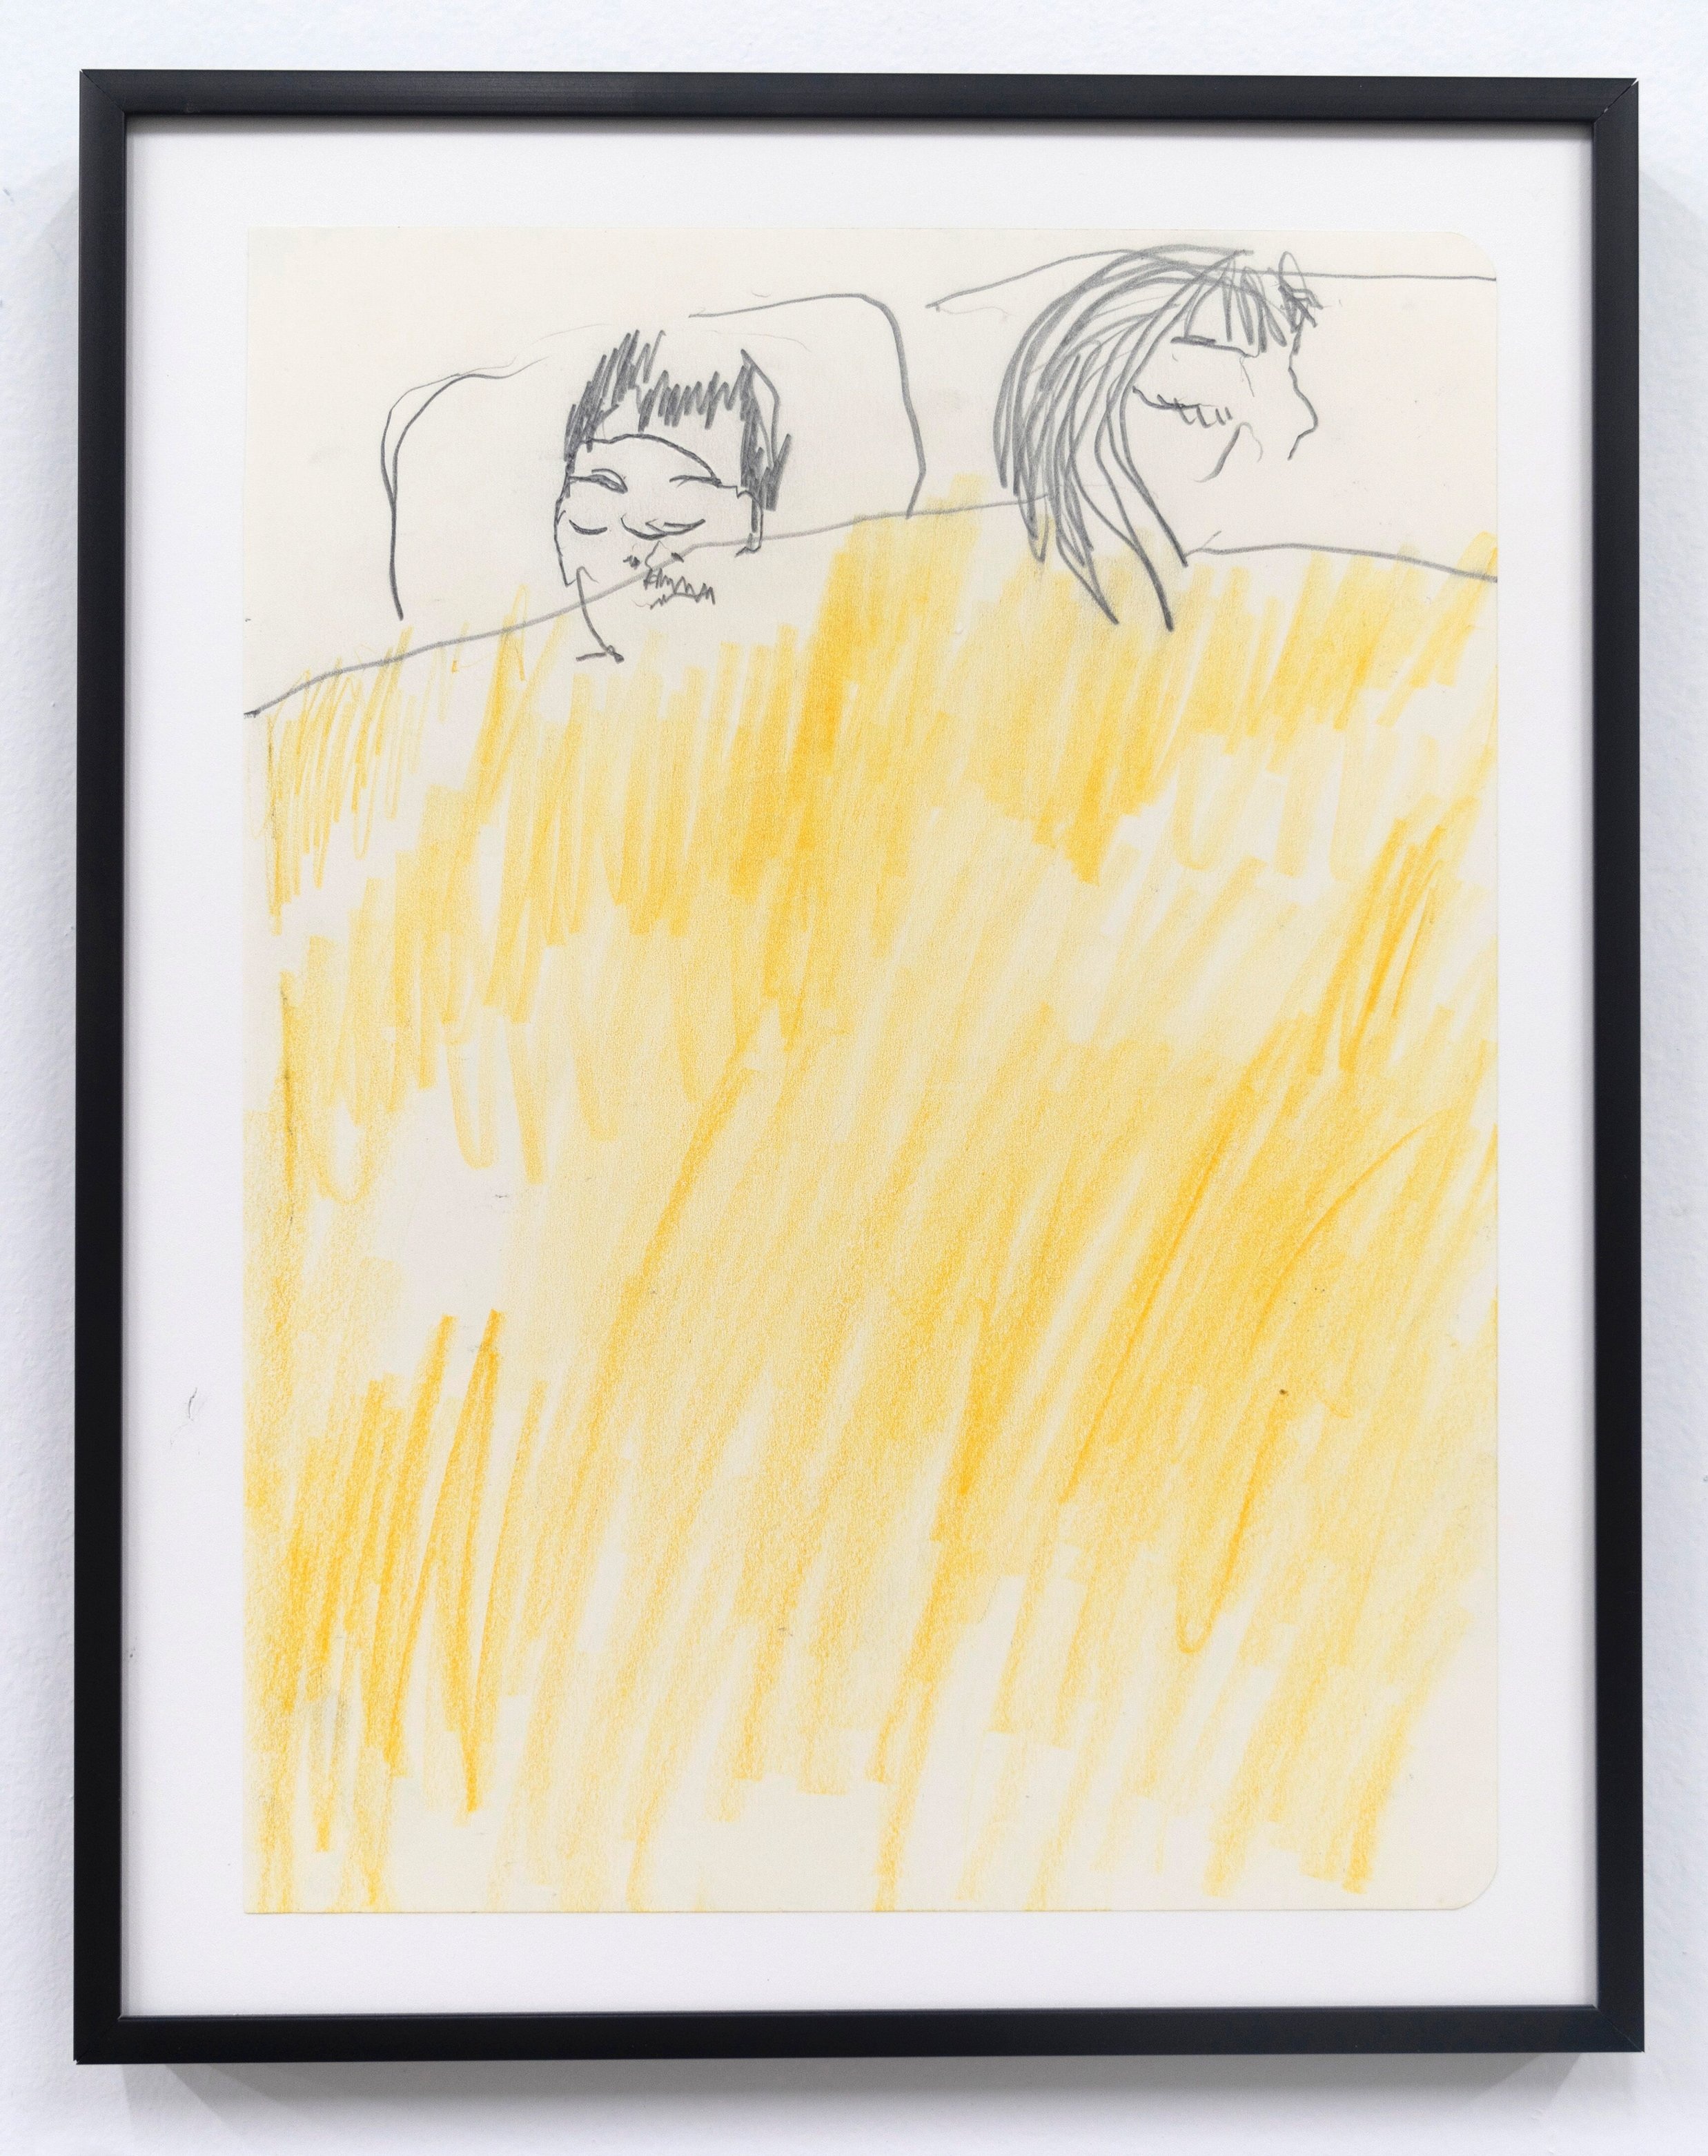   Emilie Gossiaux    Sleeping , 2018 Ink on newsprint   11 1/2 x 9 1/8 inches 29.2 x 23.2 cm 